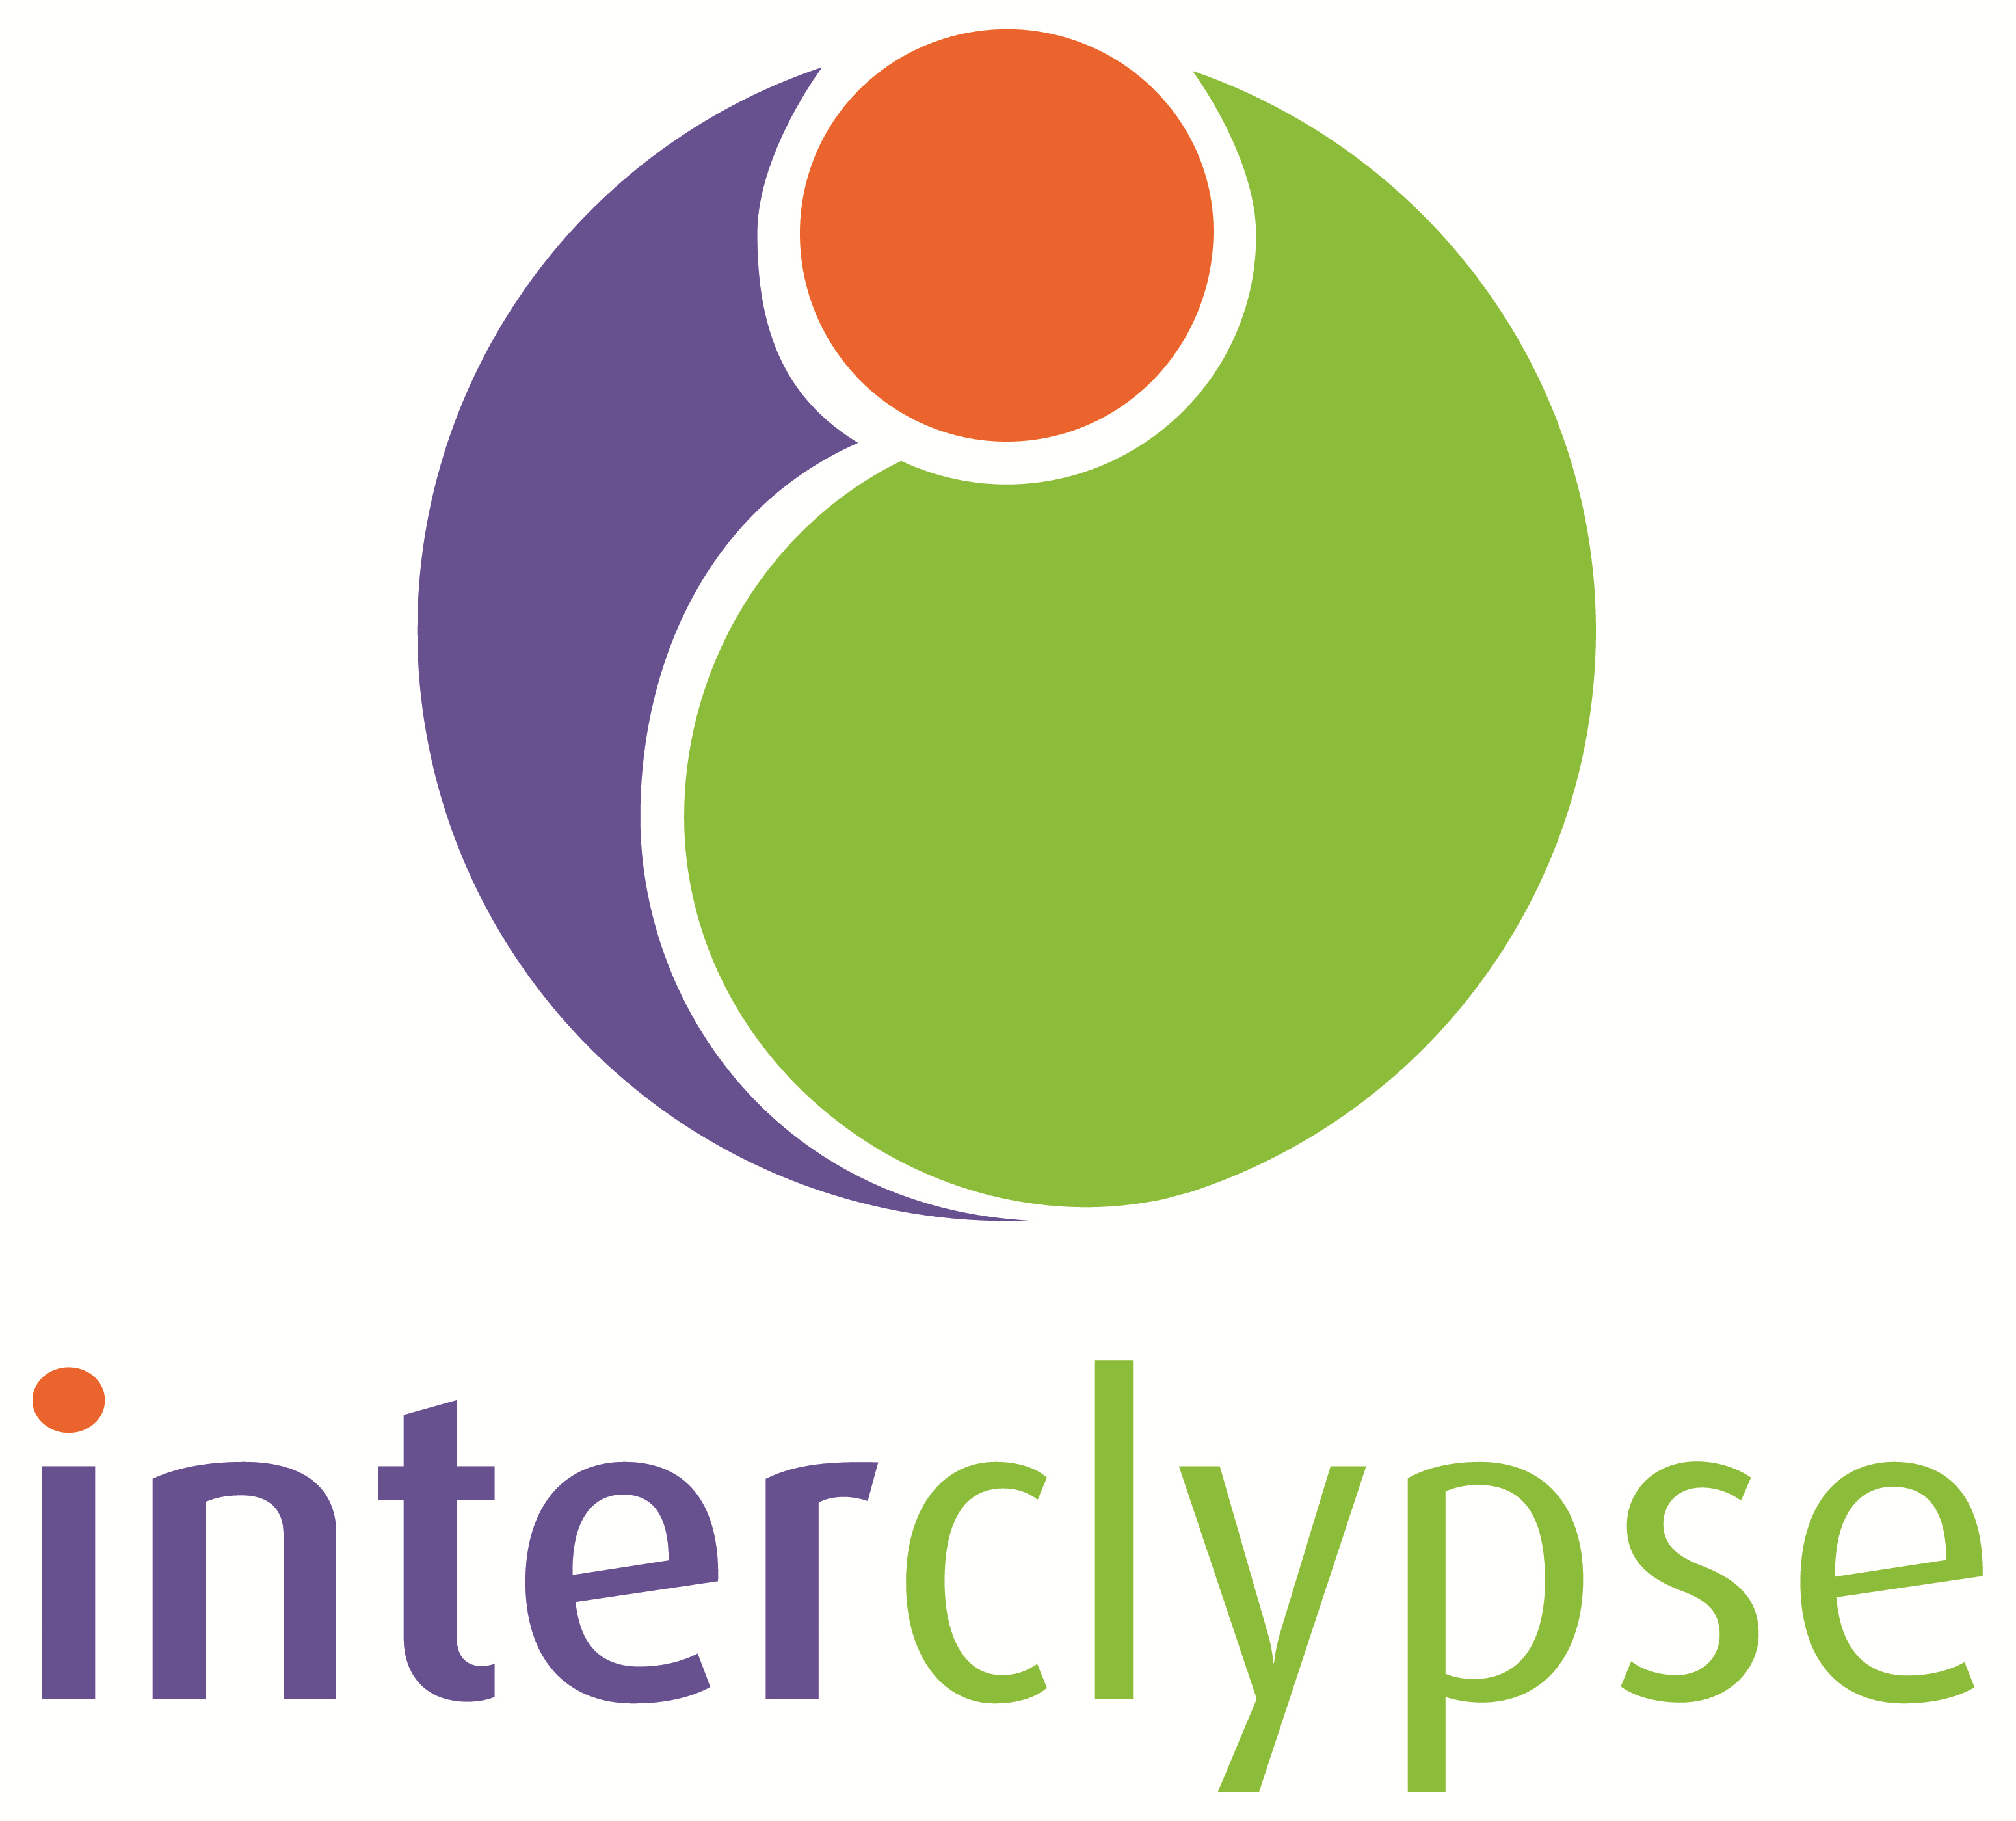 Interclypse logo